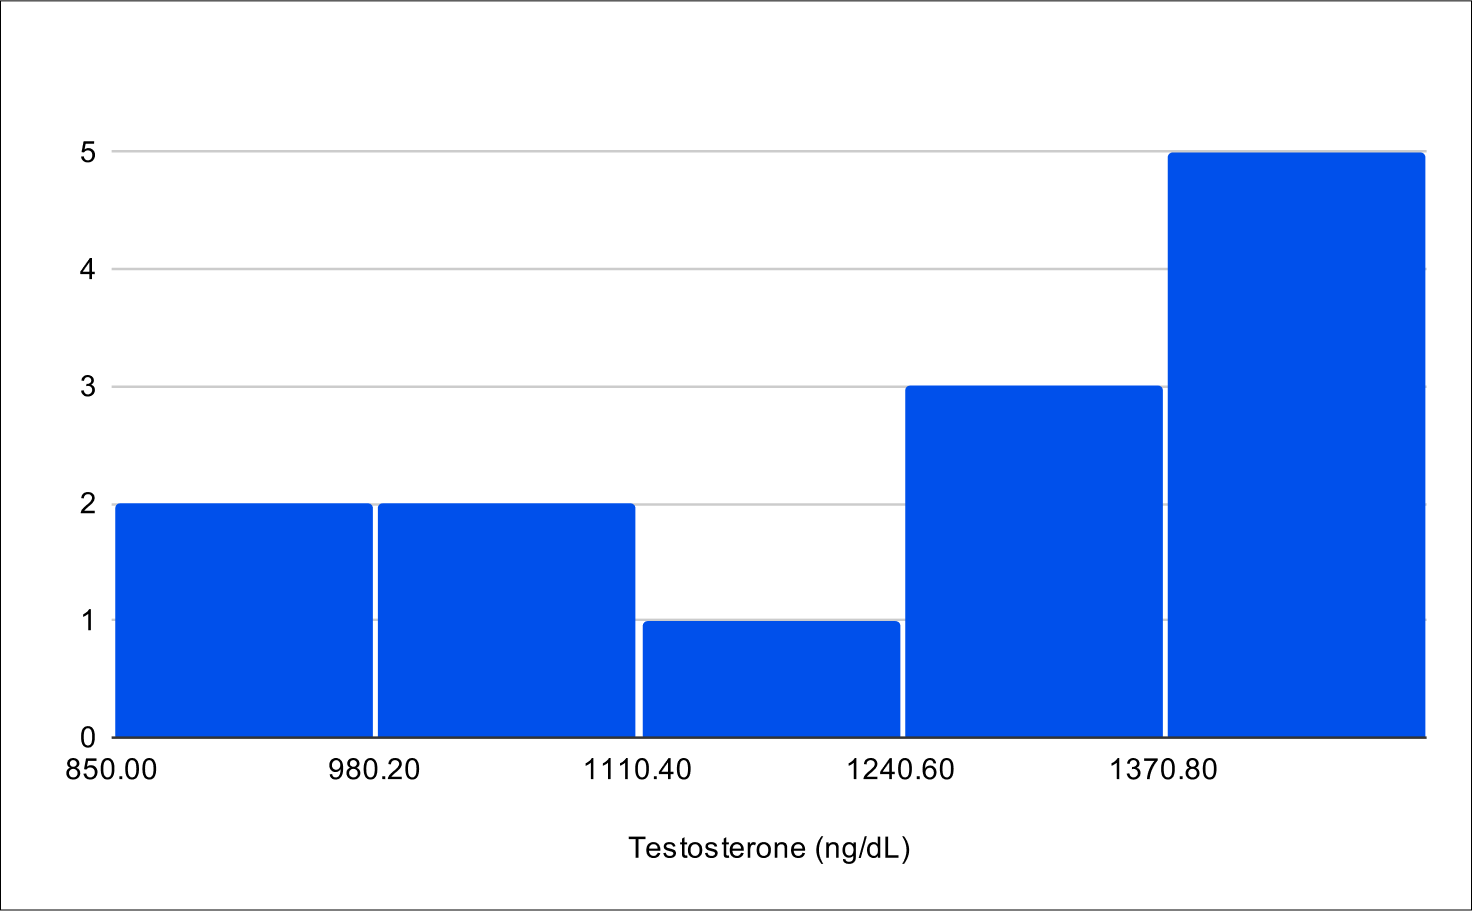 Baseline Total Testosterone